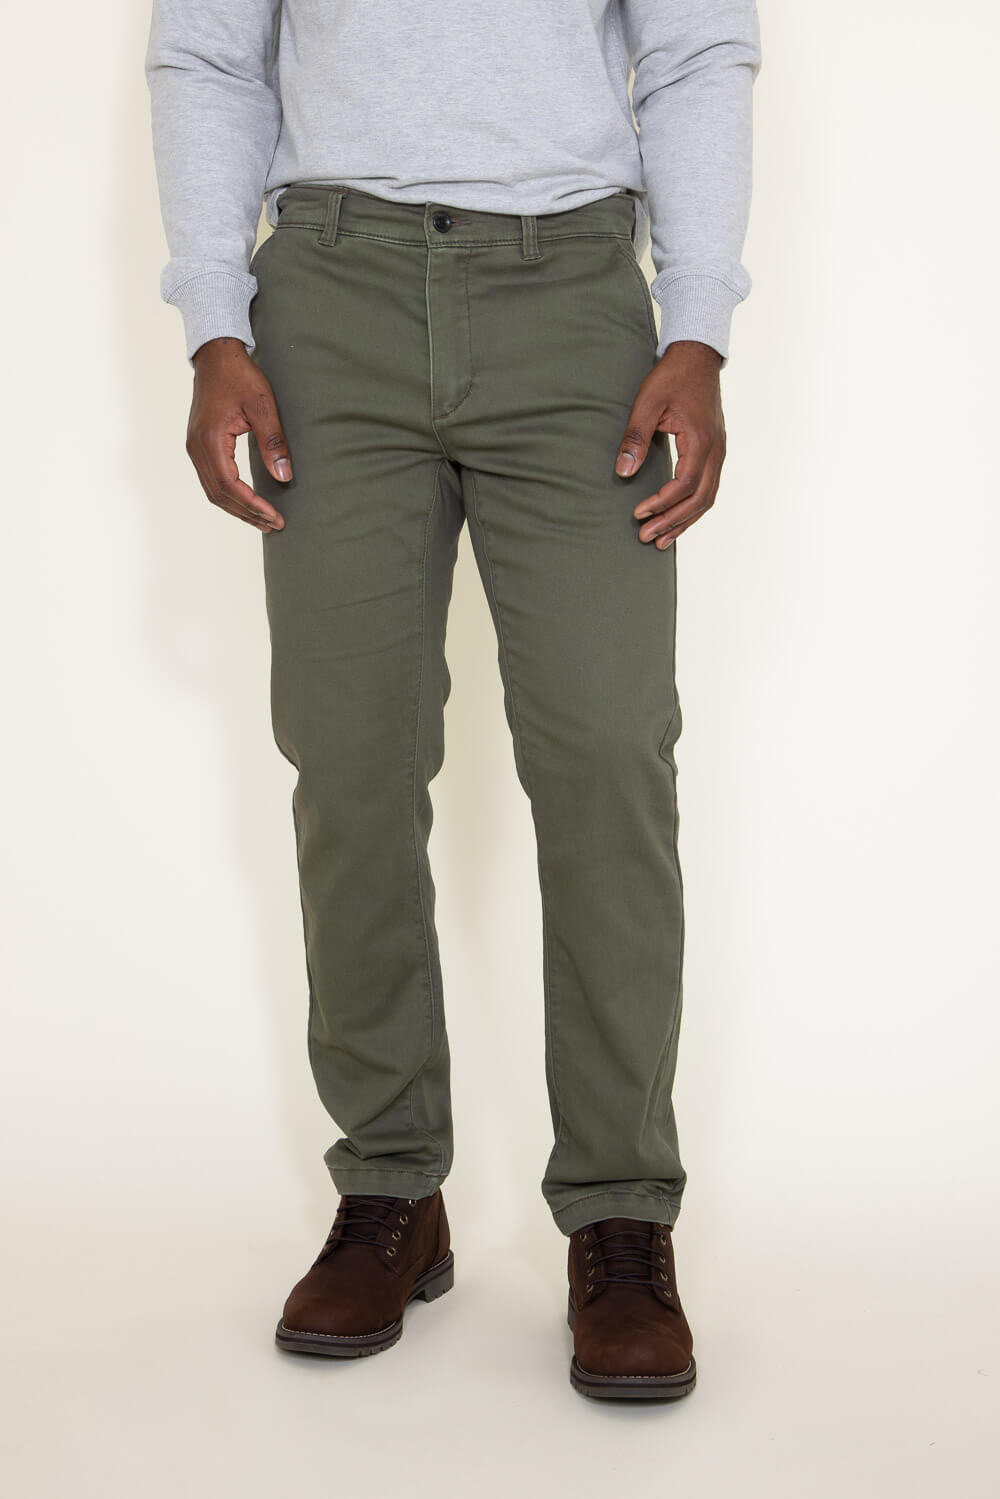 Buy Olive Green Low Rise Slim Fit Pants for Men